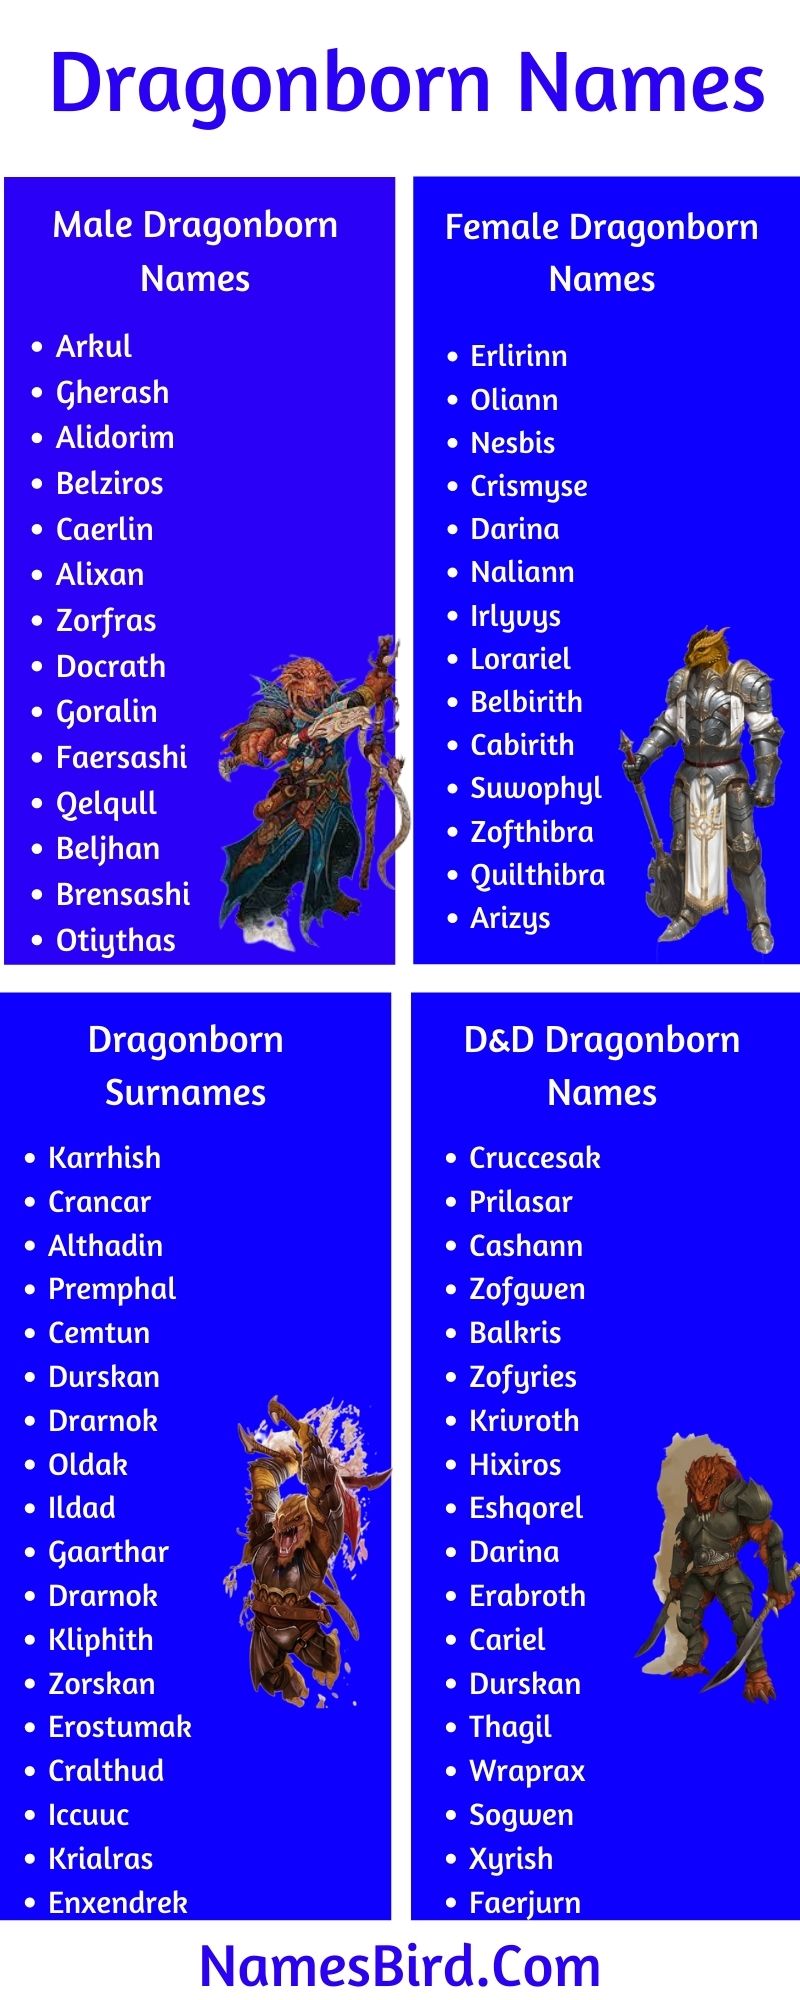 1200+ Dragonborn Names [2021] - NamesBird